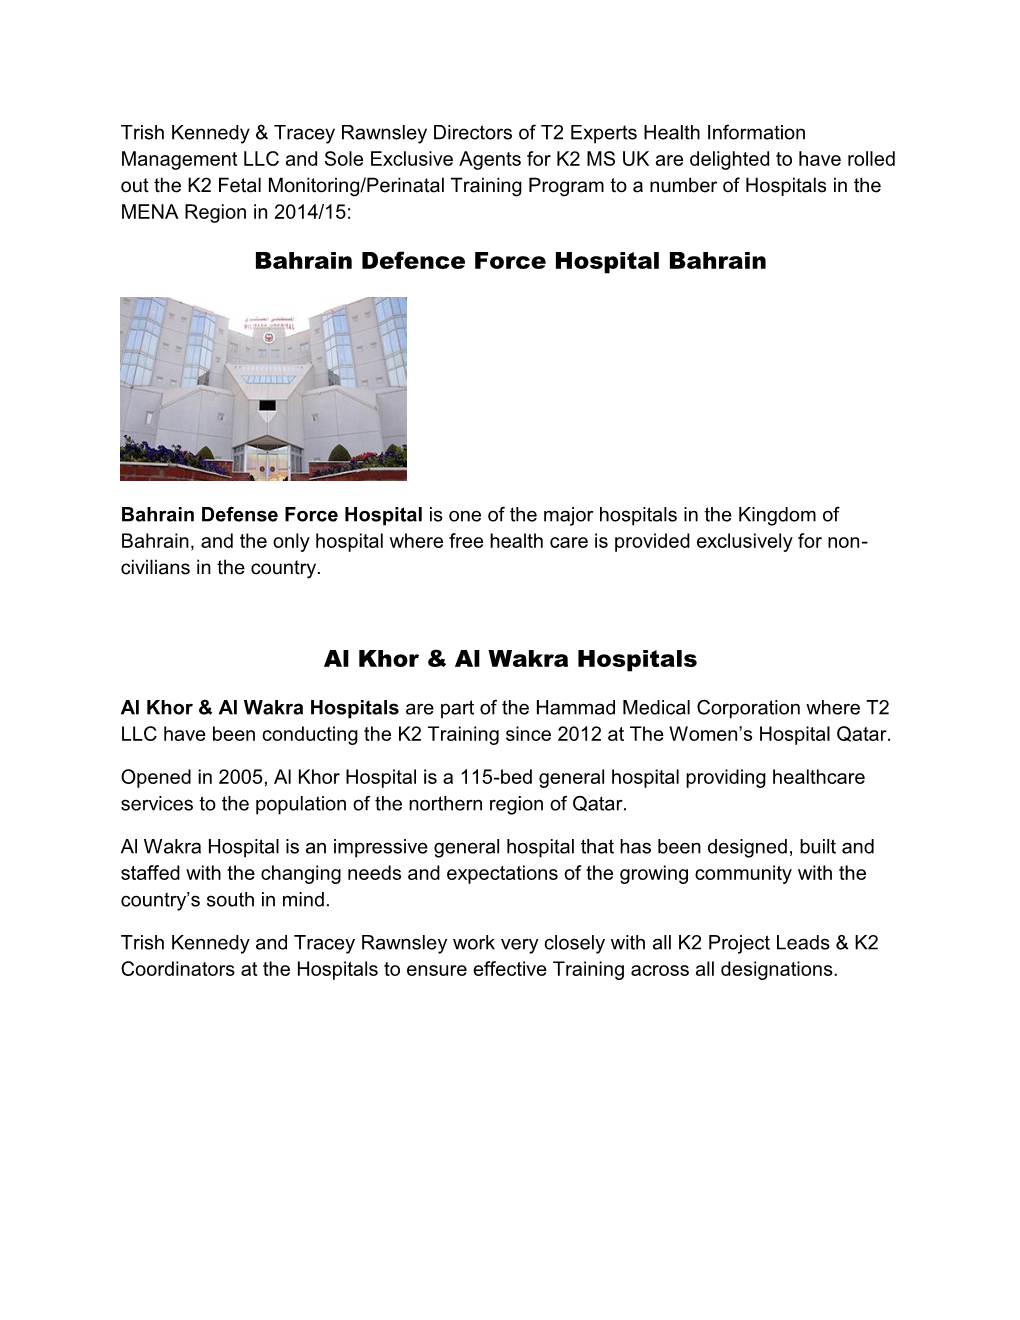 Bahrain Defence Force Hospital Bahrain Al Khor & Al Wakra Hospitals